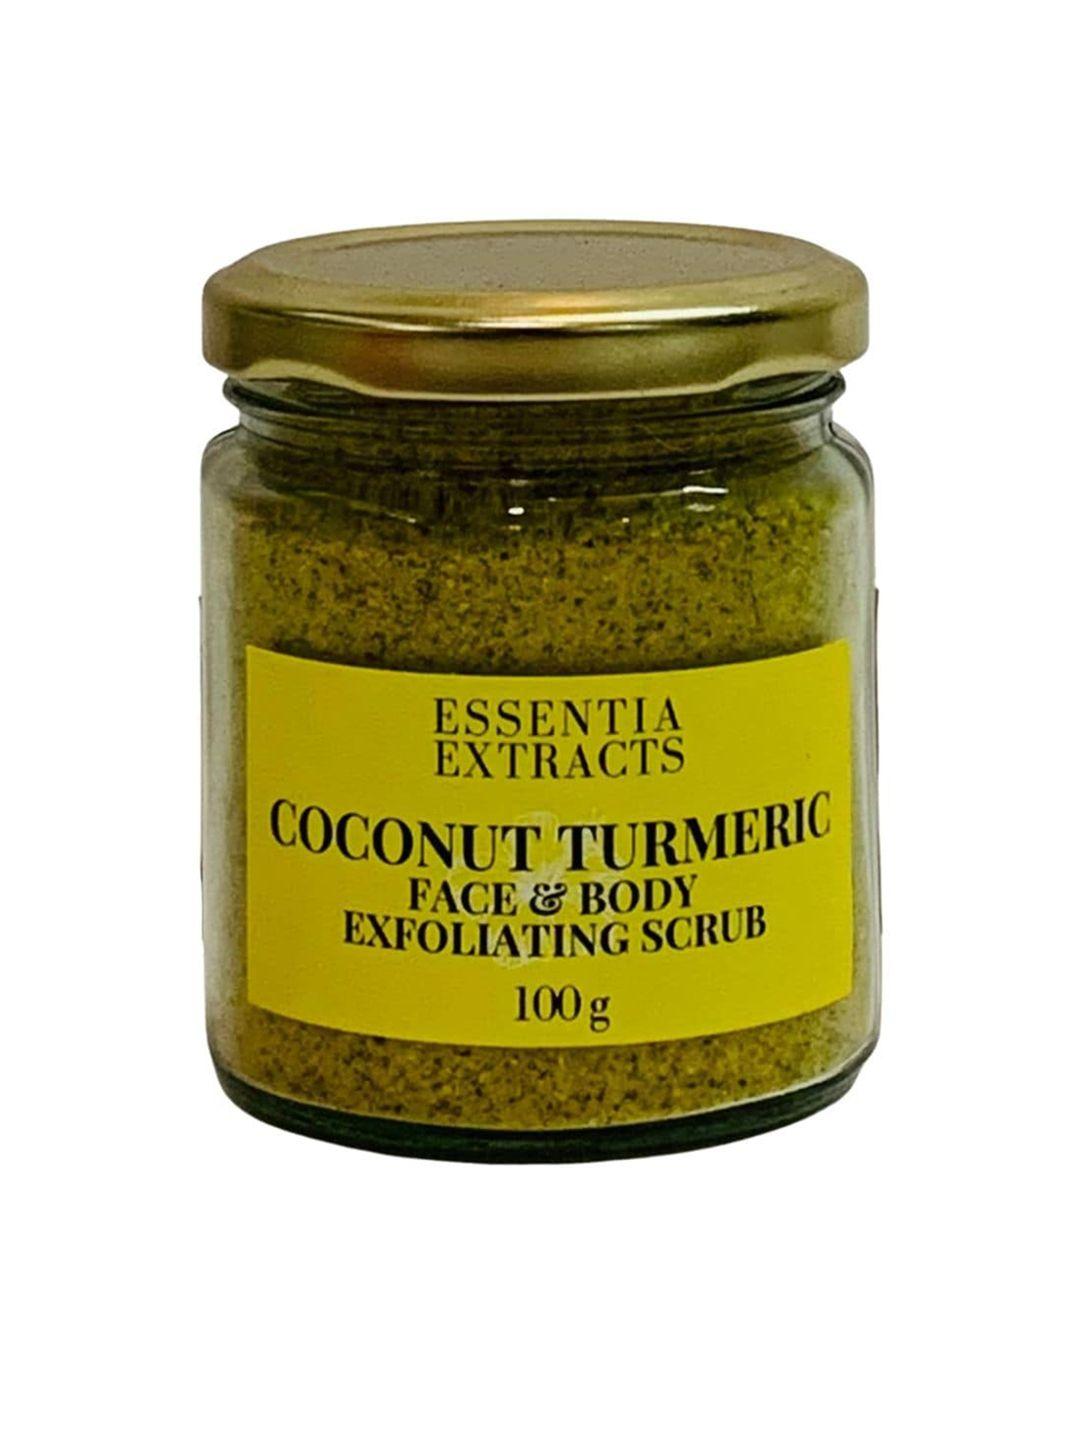 essentia extracts coconut turmeric face & body exfoliating scrub-100g